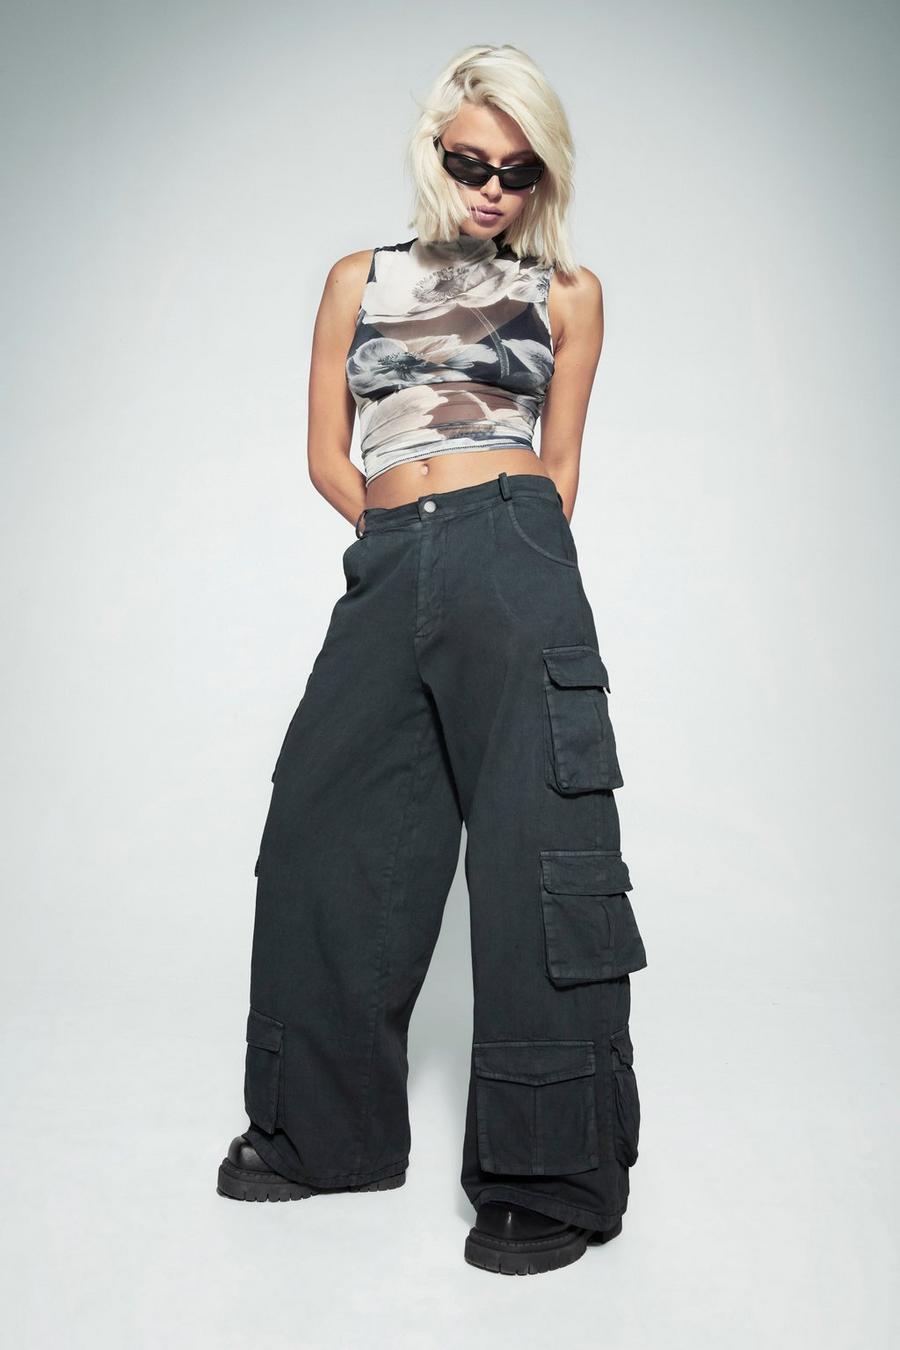 Charcoal Kourtney Kardashian Barker Oversized Cargo Pants